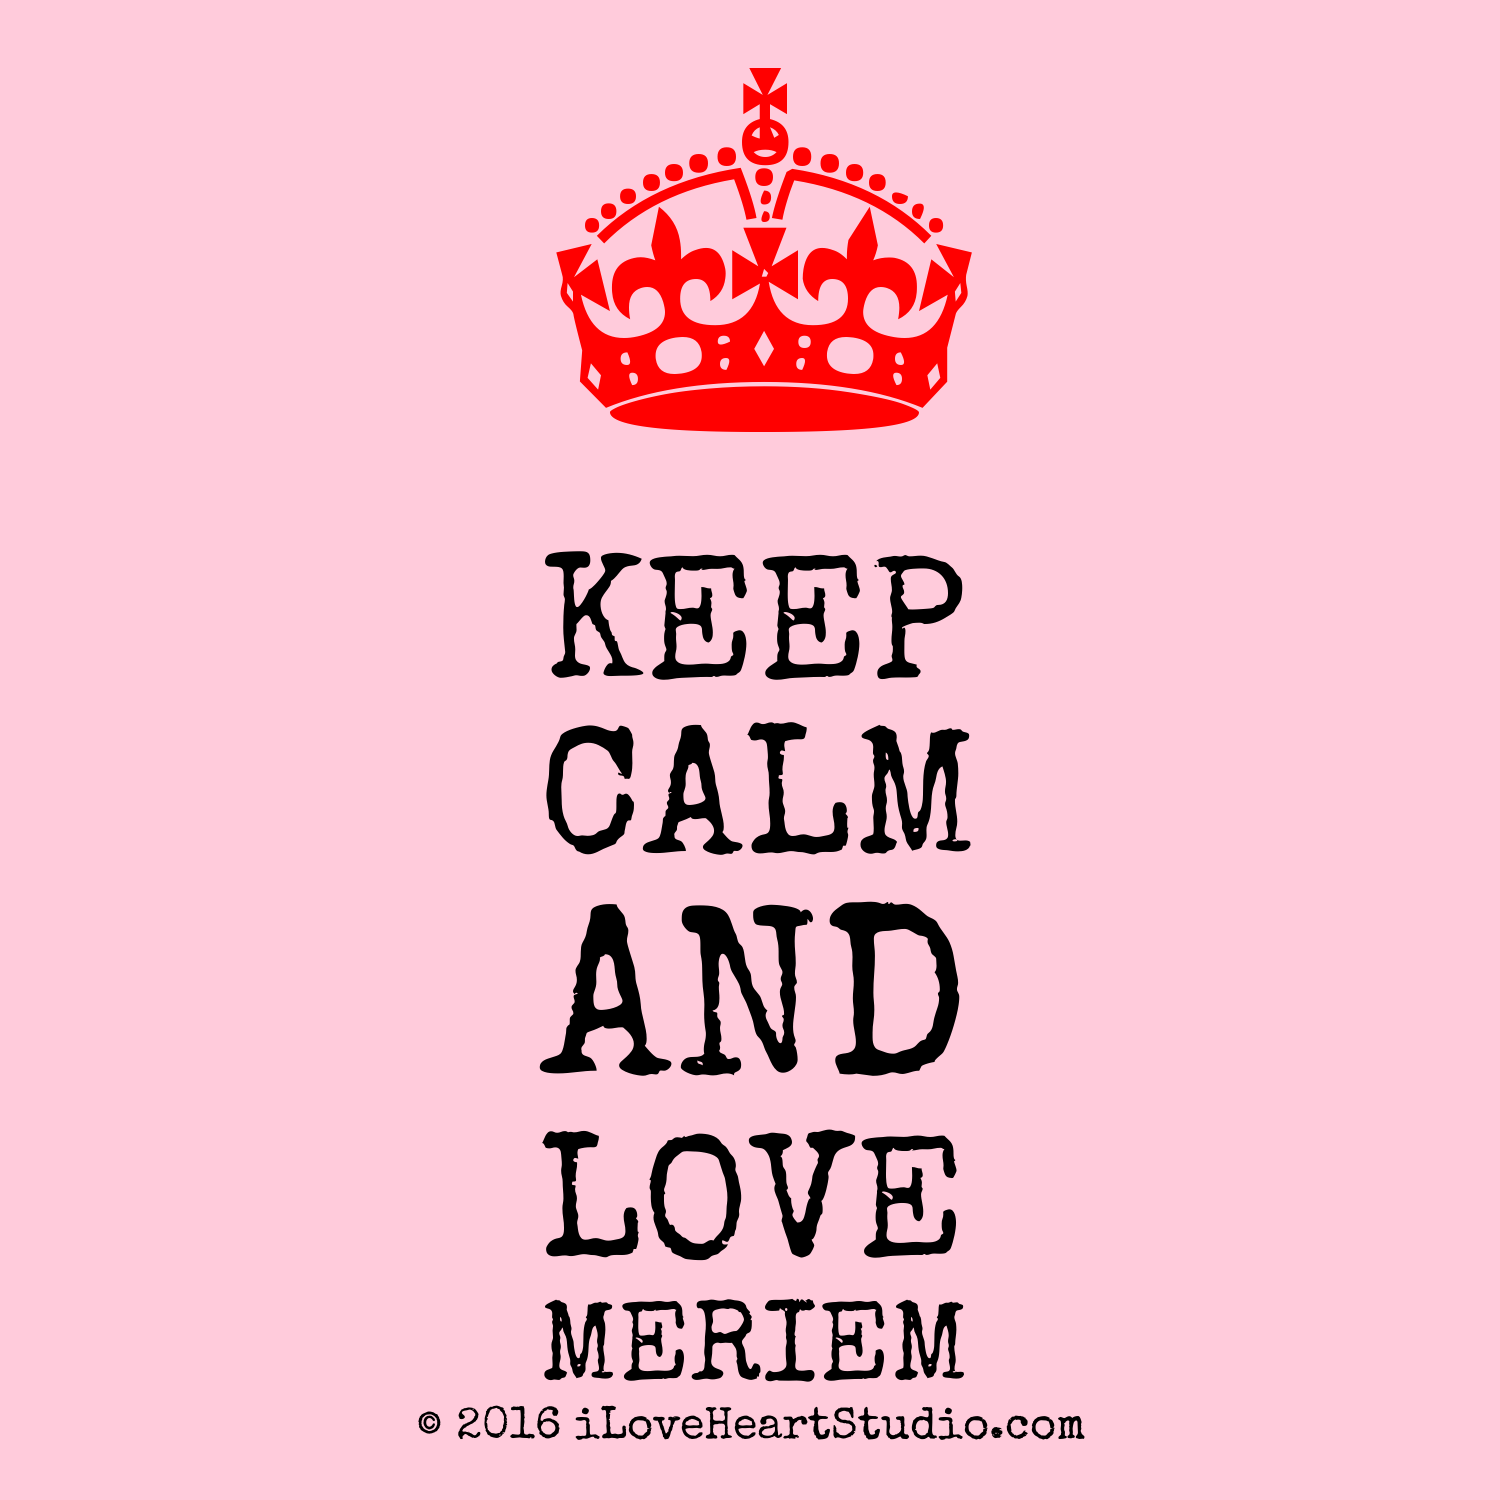 Crown] keep calm and love meriem' design on t-shirt, poster, mug ...